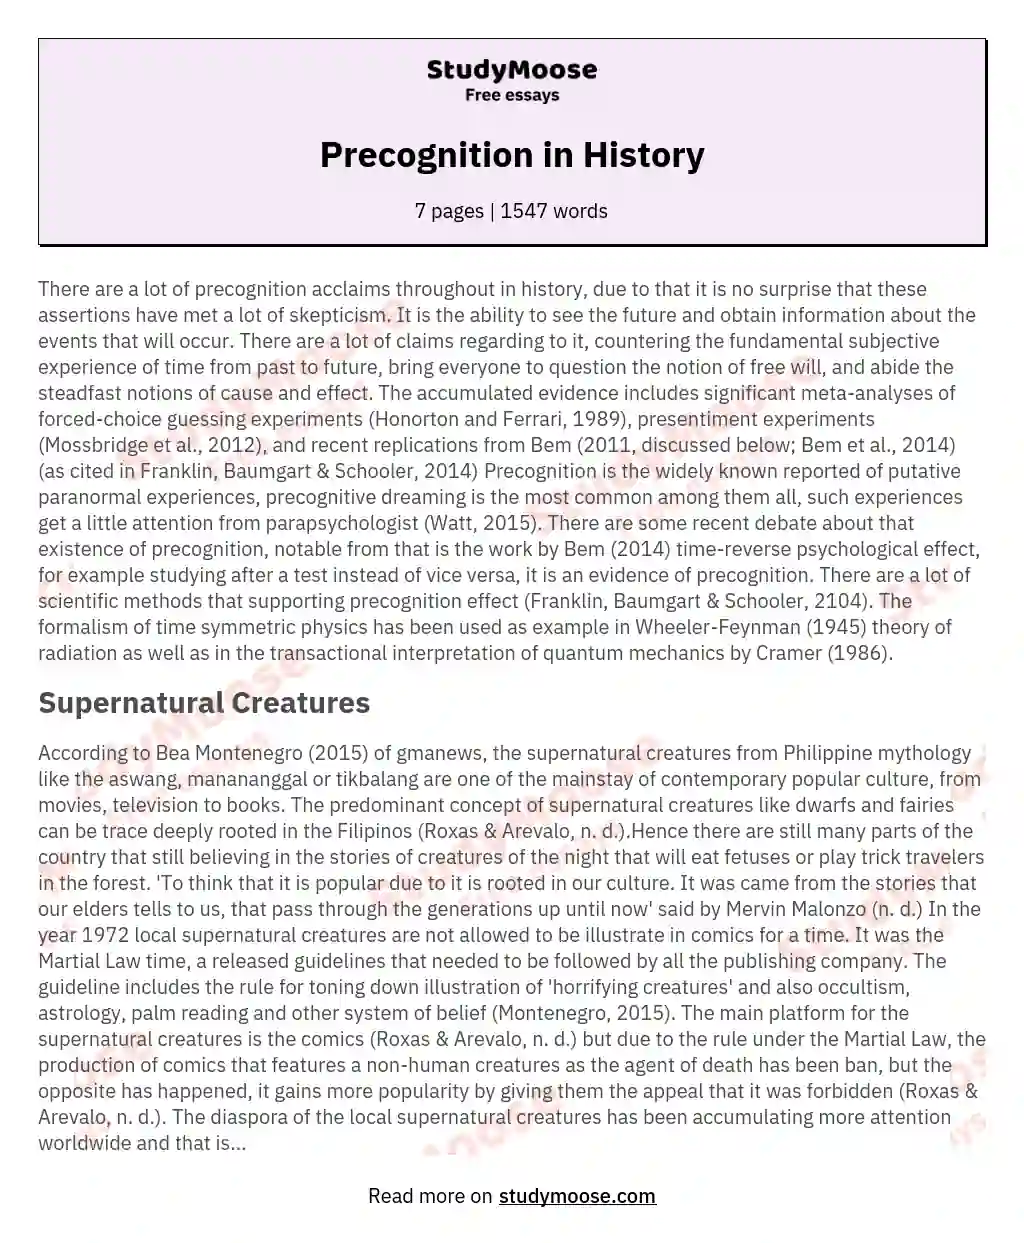 Precognition in History essay